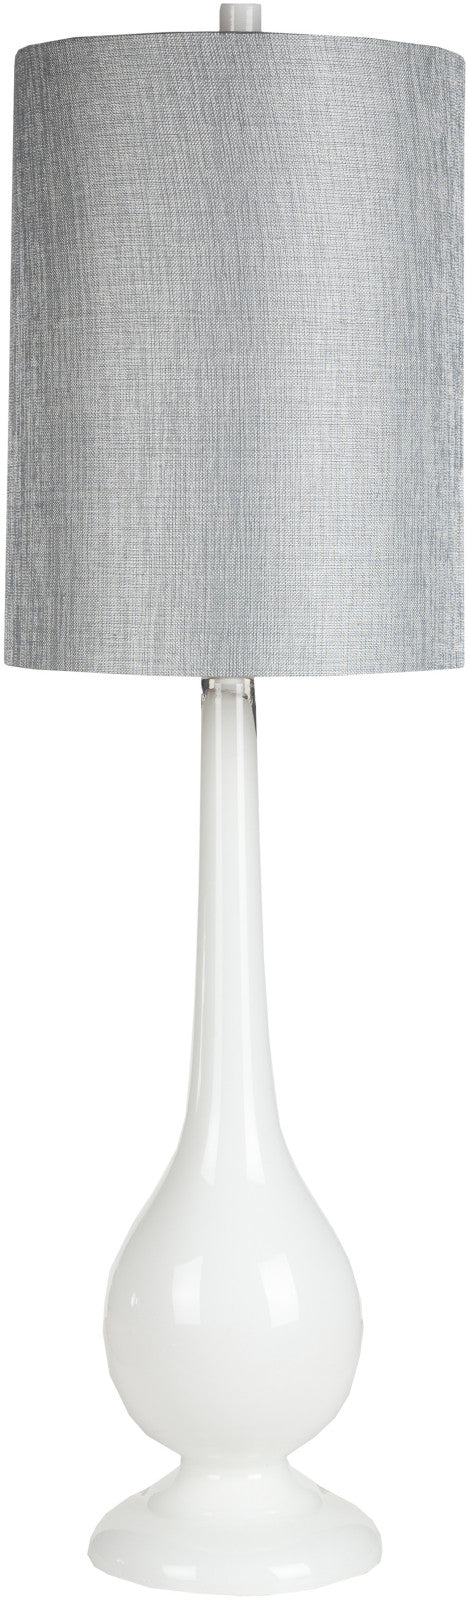 Surya Glass LMP-1021 Silver Lamp Table Lamp